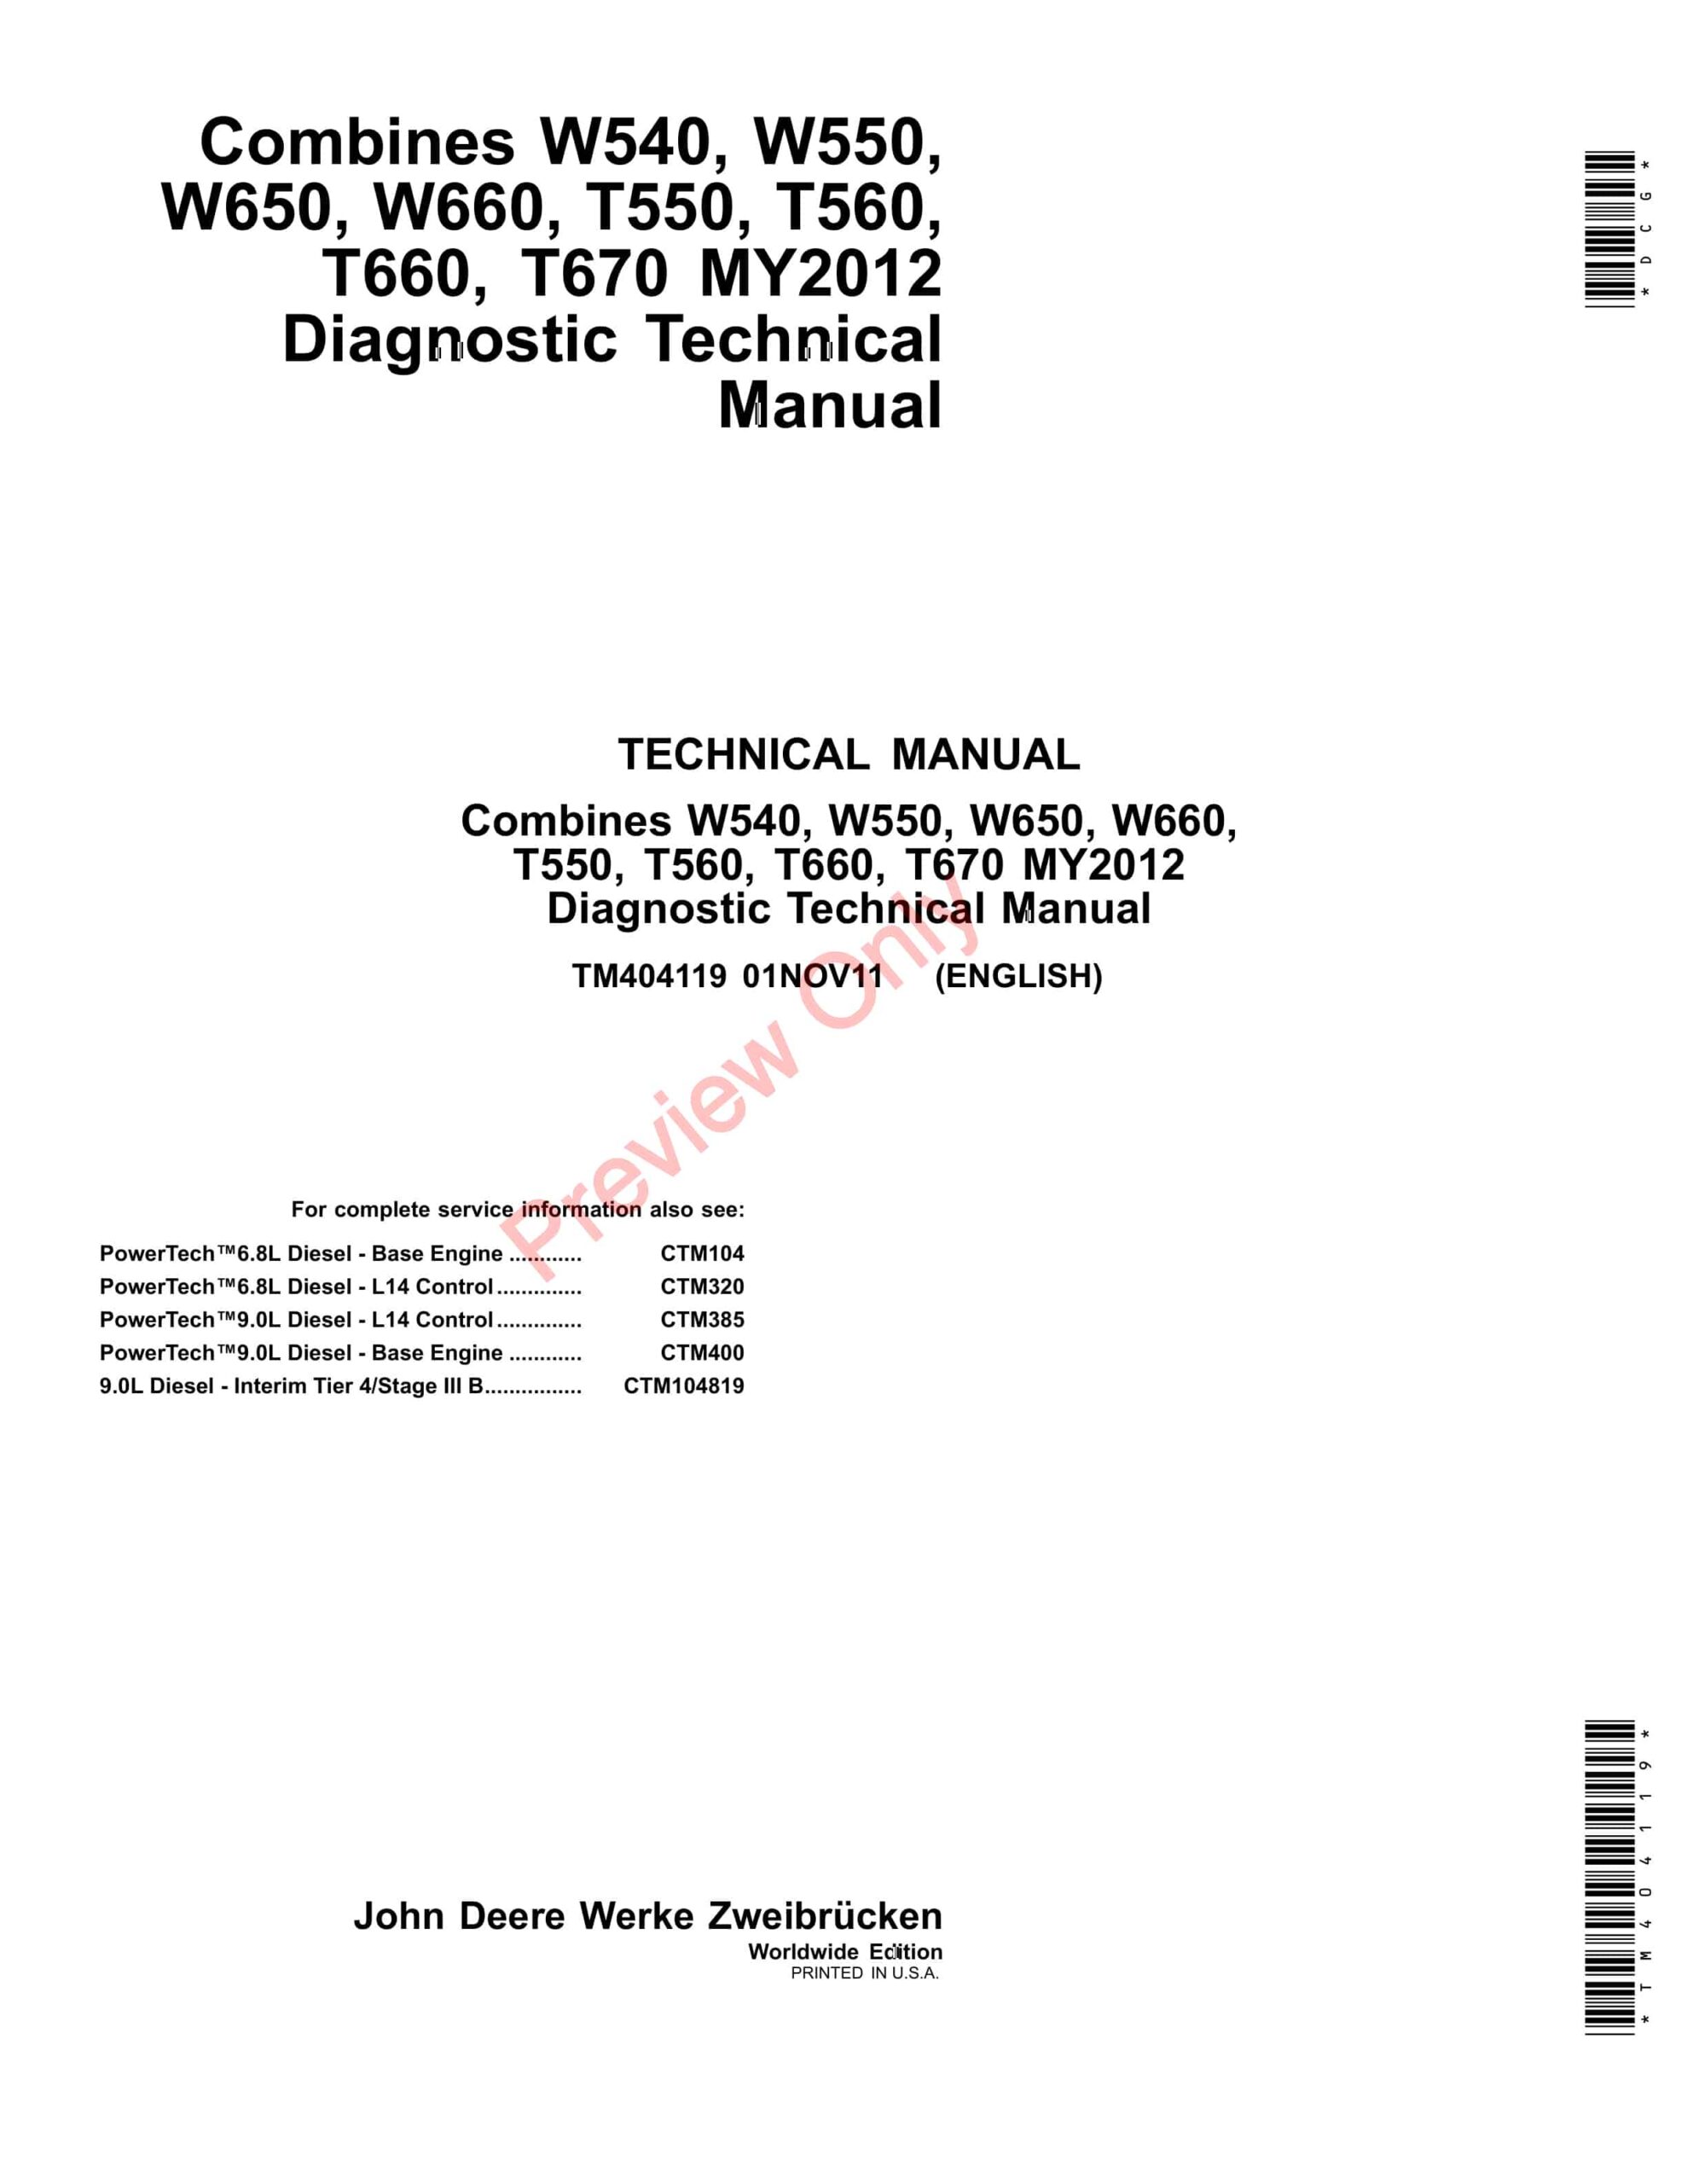 John Deere W540, W550, W650, W660, T550, T560, T660 and T670 Combines Diagnostic Technical Manual TM404119 01NOV11-1